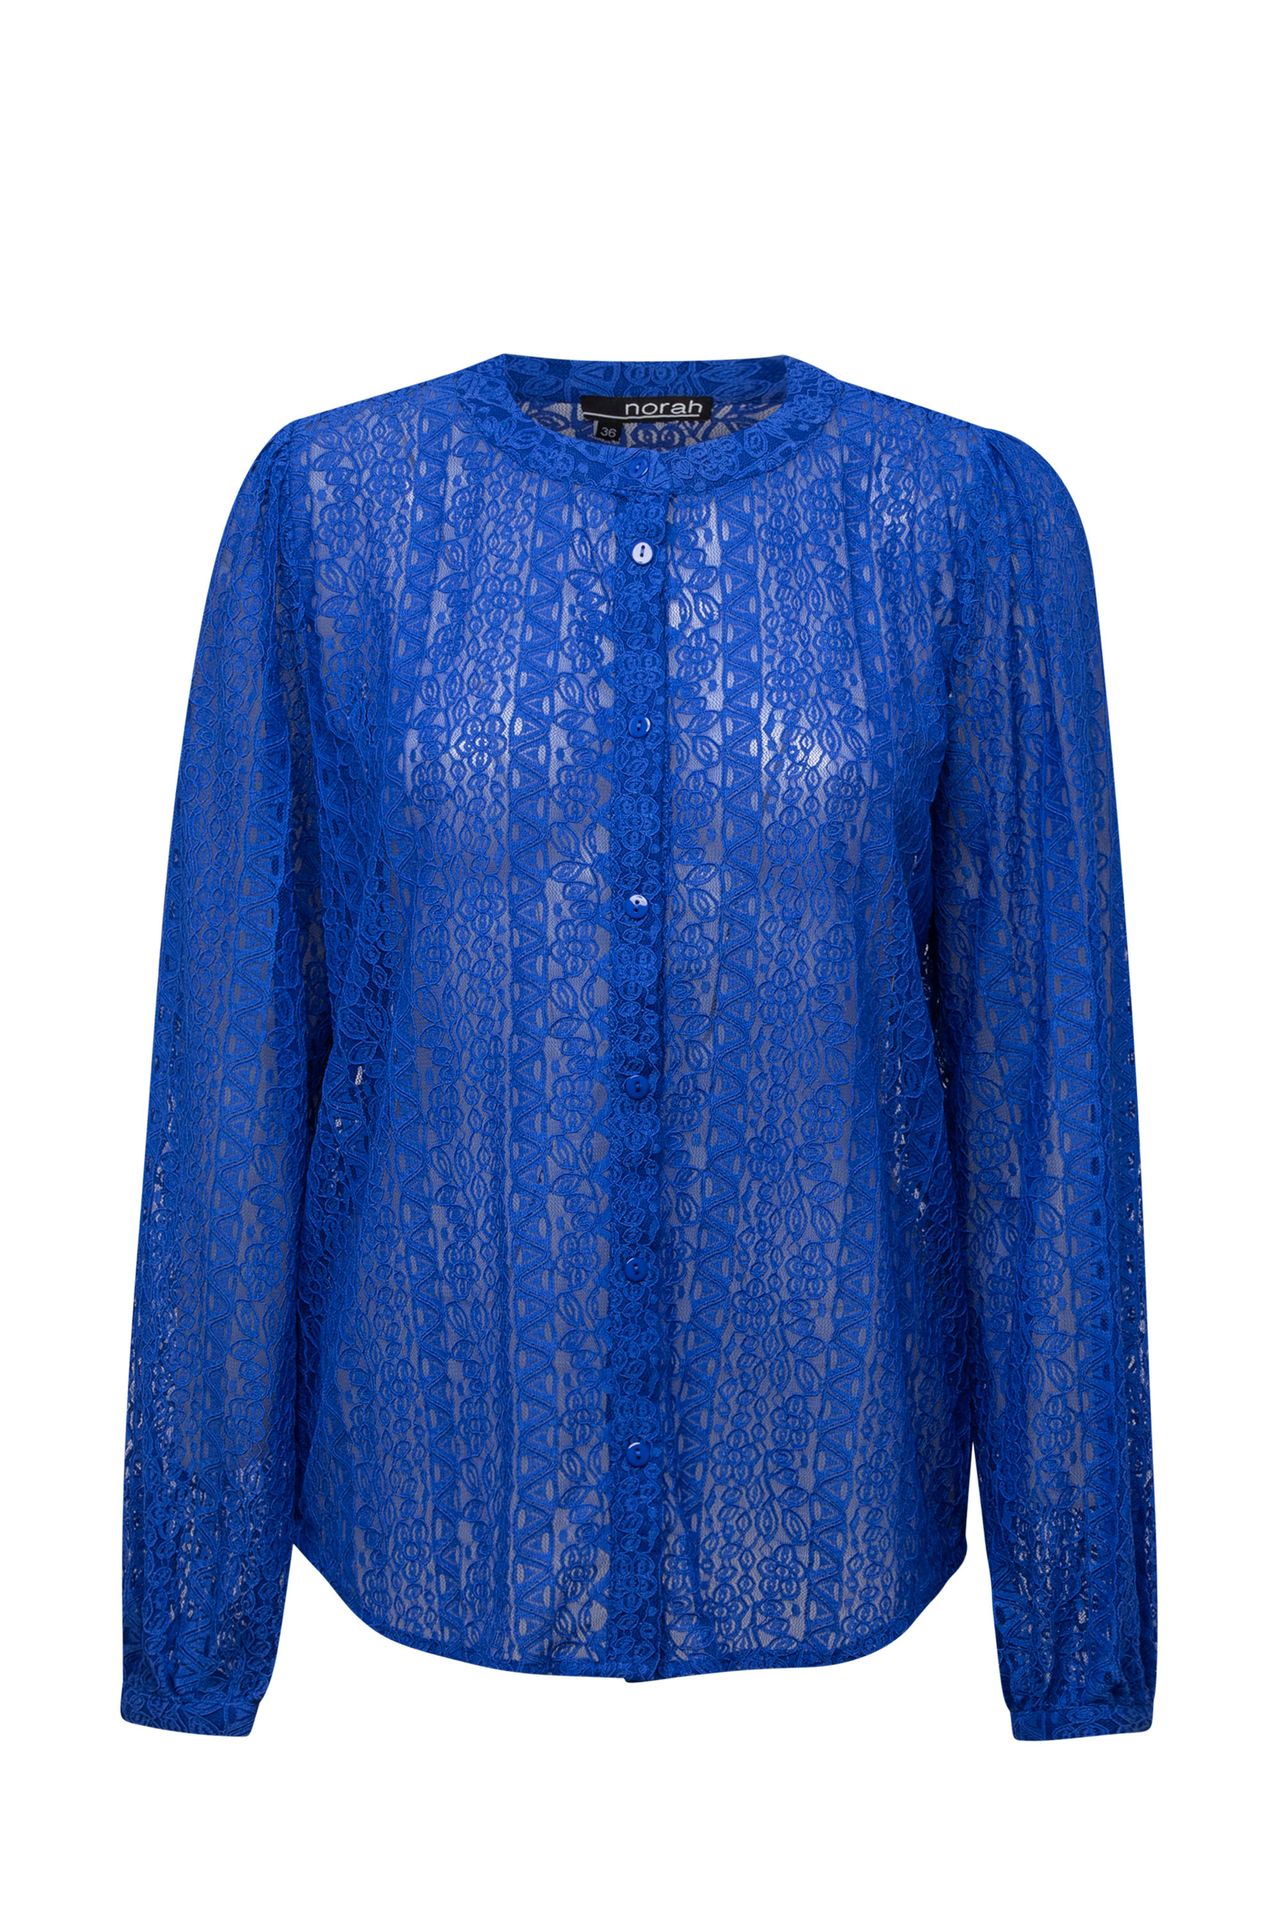 Norah Blauwe blouse van kant cobalt 213961-468